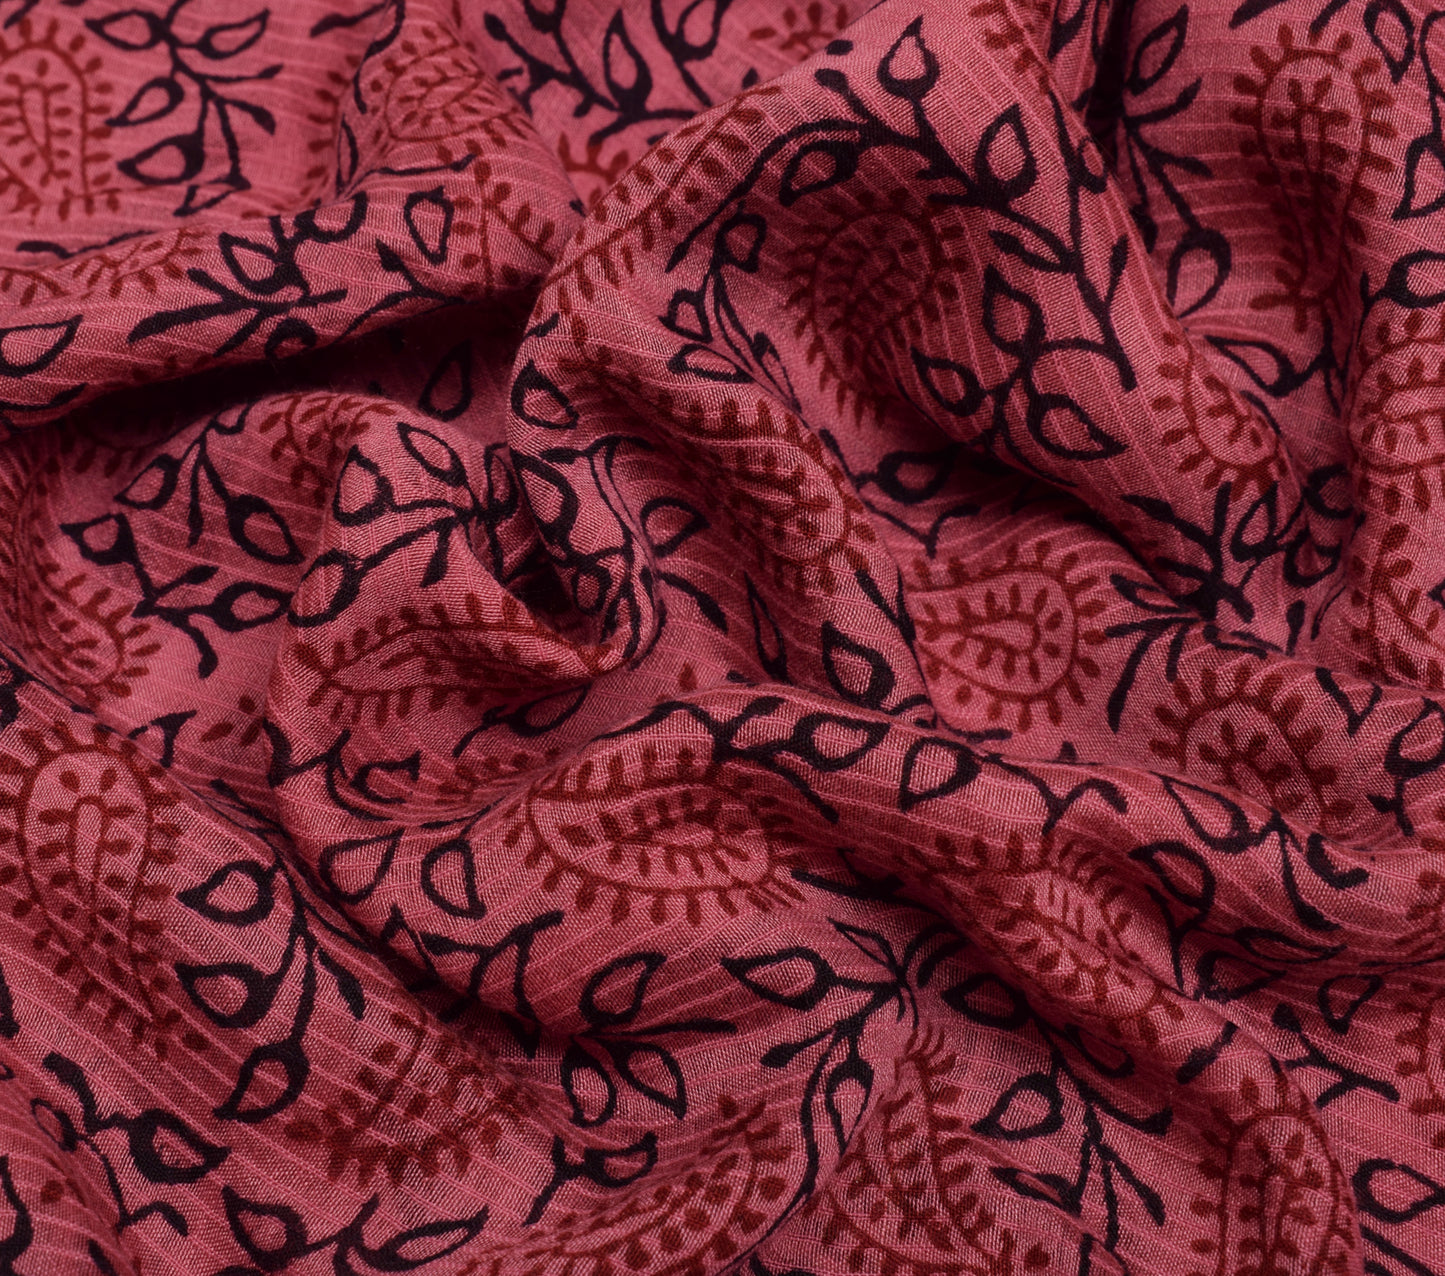 Sushila Vintage Pink Saree 100% Pure Cotton Hand Block Printed Paisley Fabric